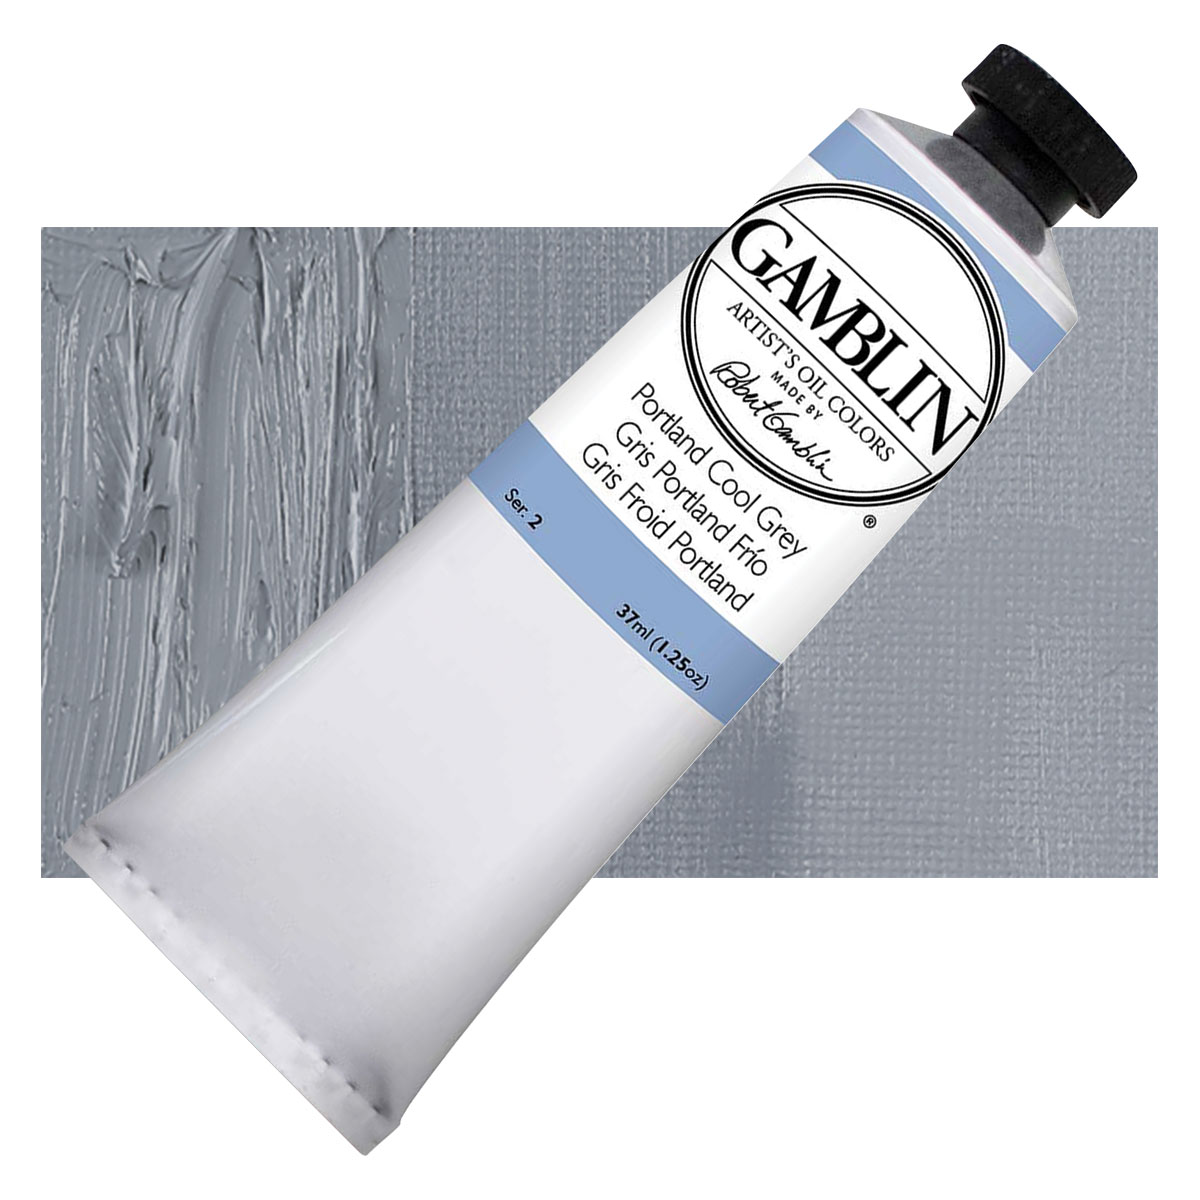 Gamblin Artist Oil Paint Set for Professionals - Cool White - 150ml Tubes -  2 Pack